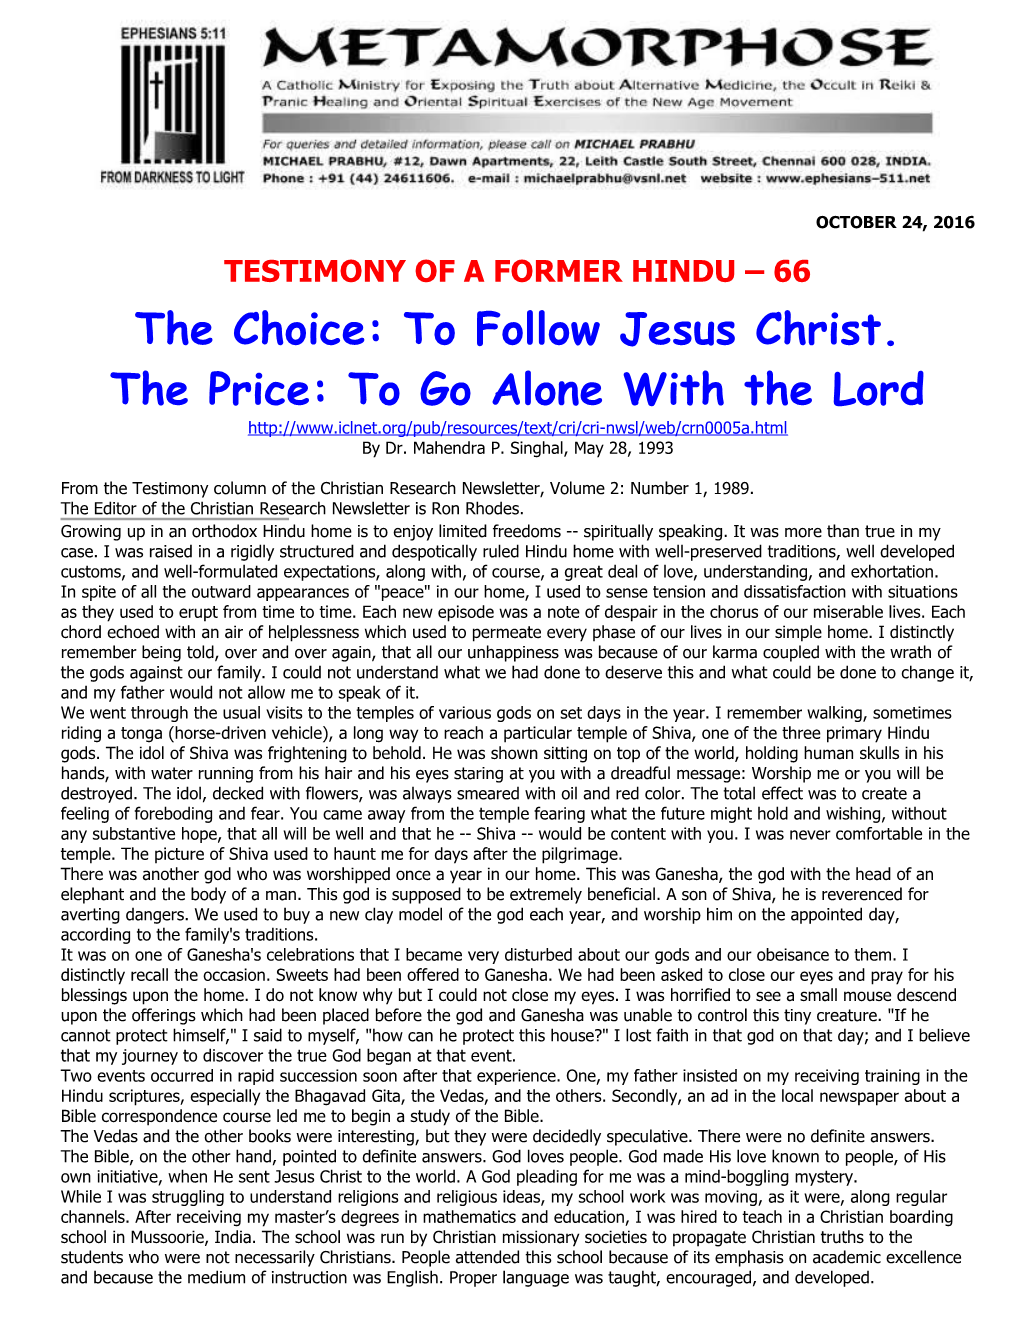 The Choice: to Follow Jesus Christ